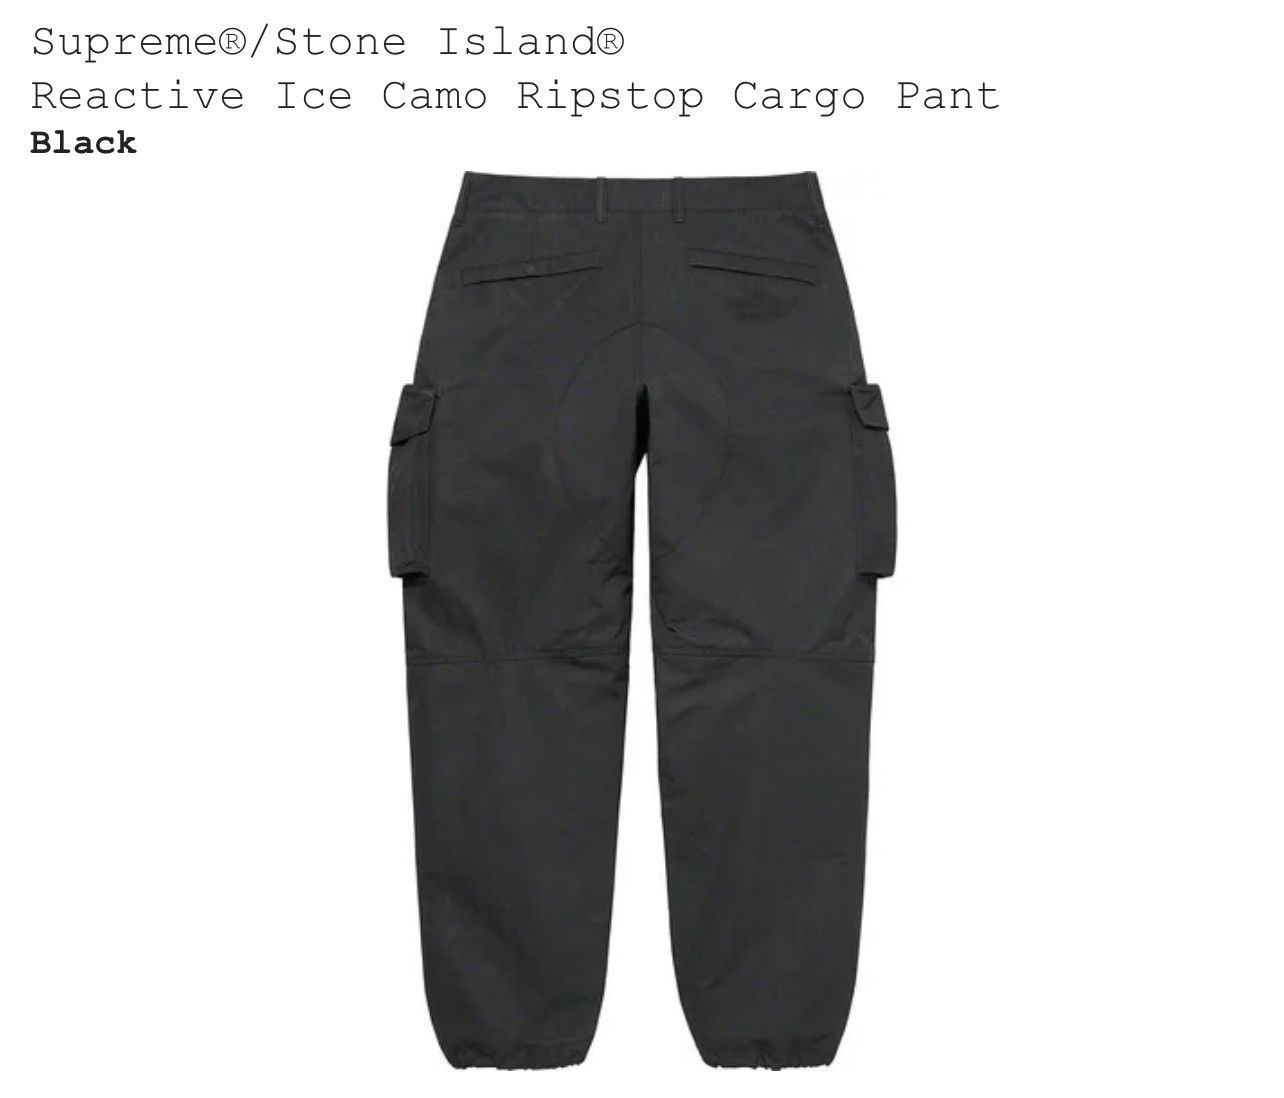 Supreme Supreme x Stone Island reactive ice camo cargo pants | Grailed